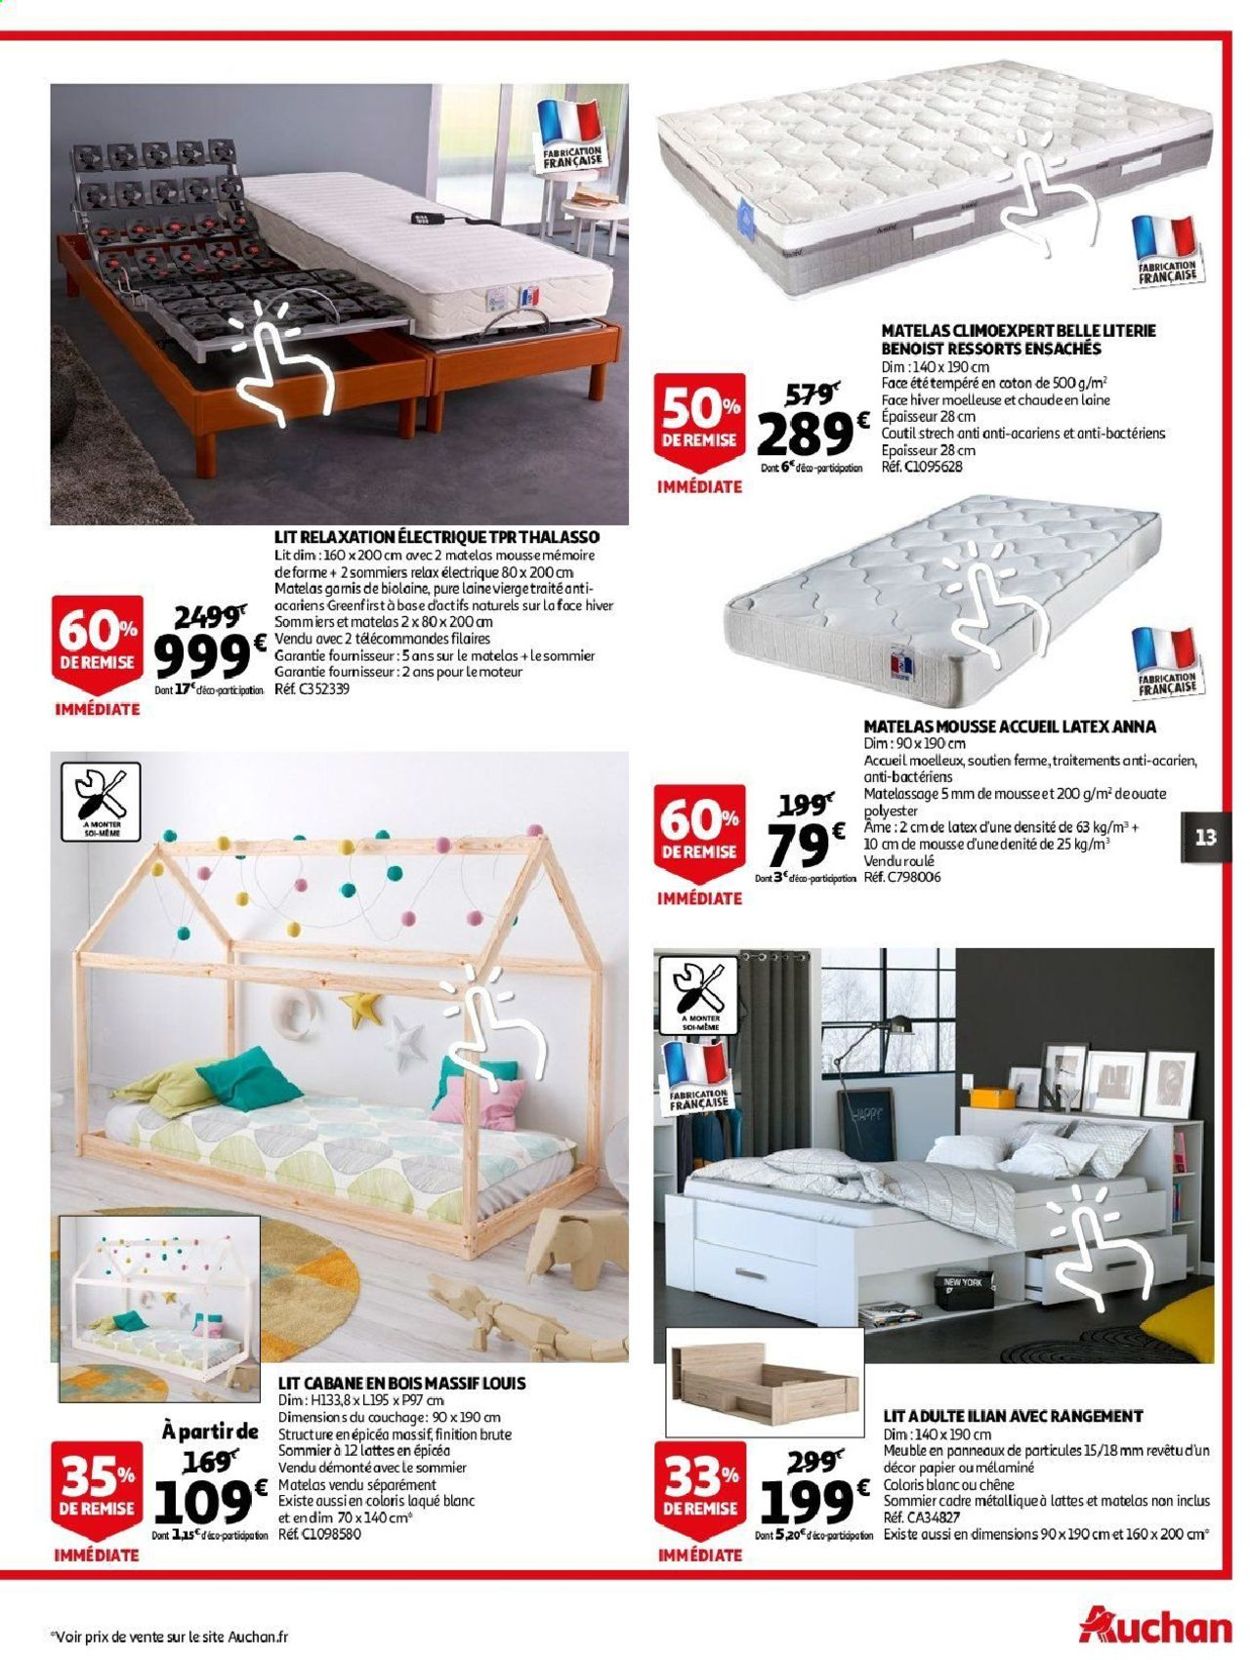 Auchan Catalogue - 26.06-02.07.2019 (Page 13)